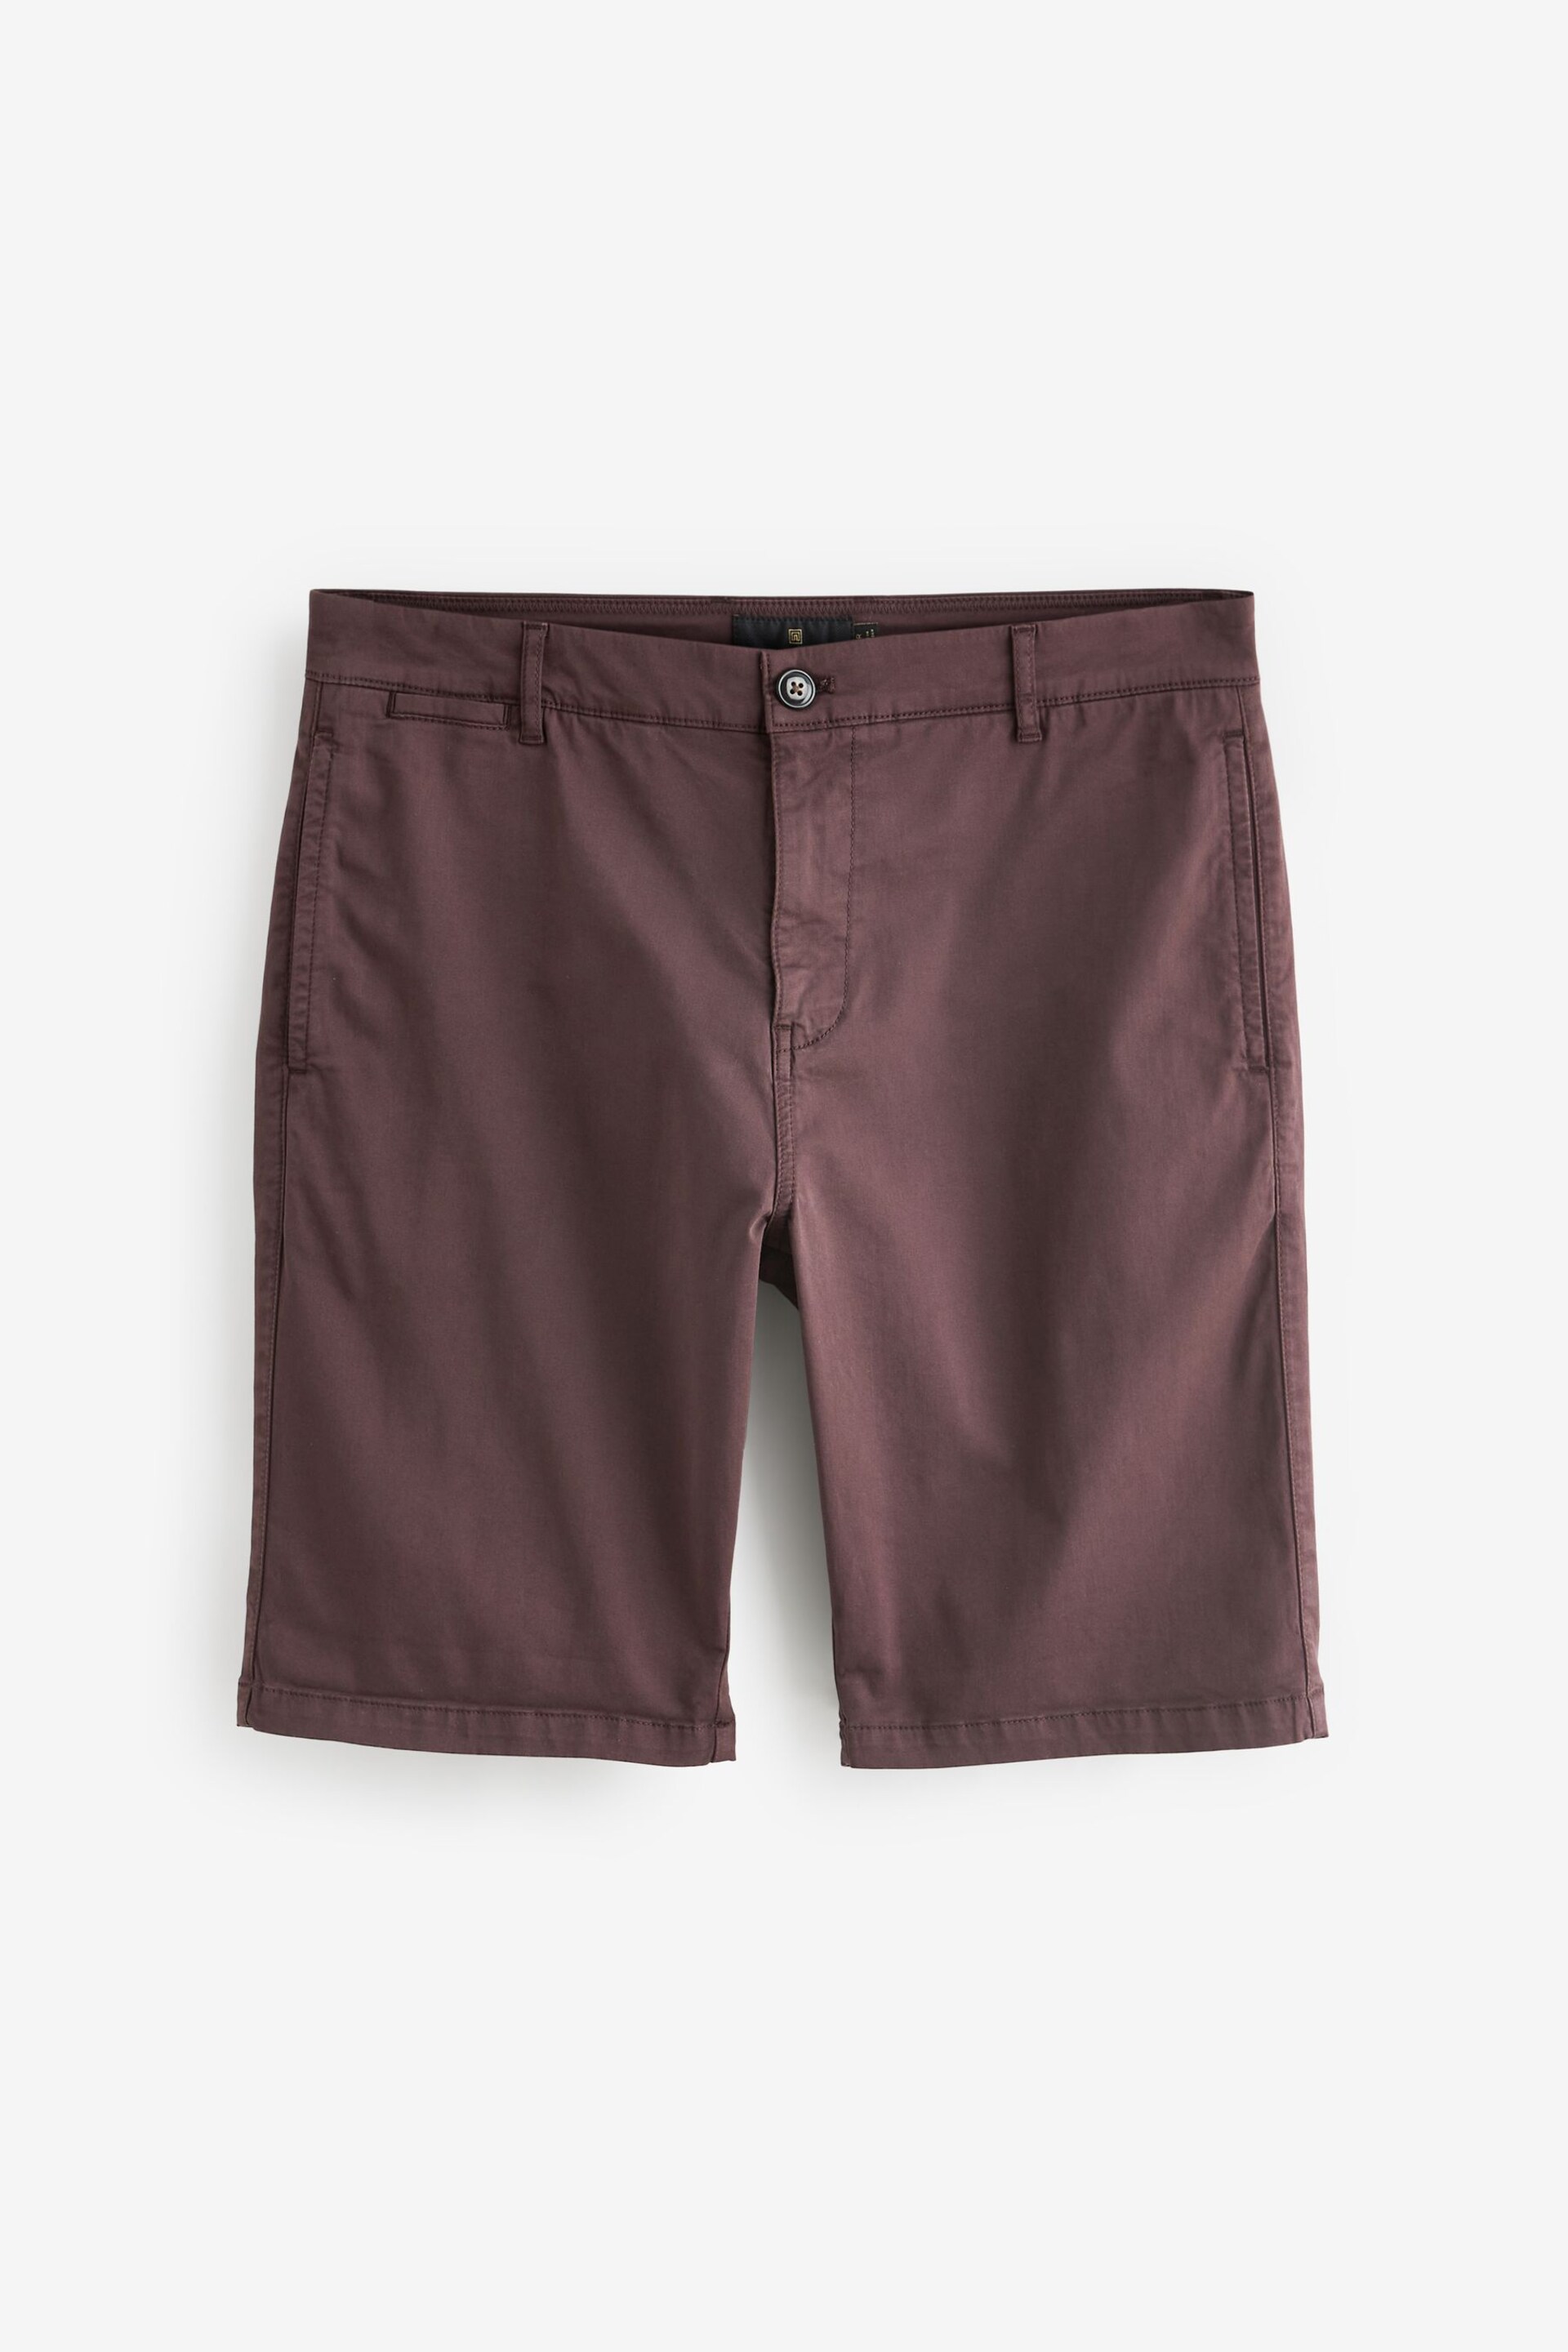 Burgundy Red Slim Fit Premium Laundered Stretch Chino Shorts - Image 6 of 9